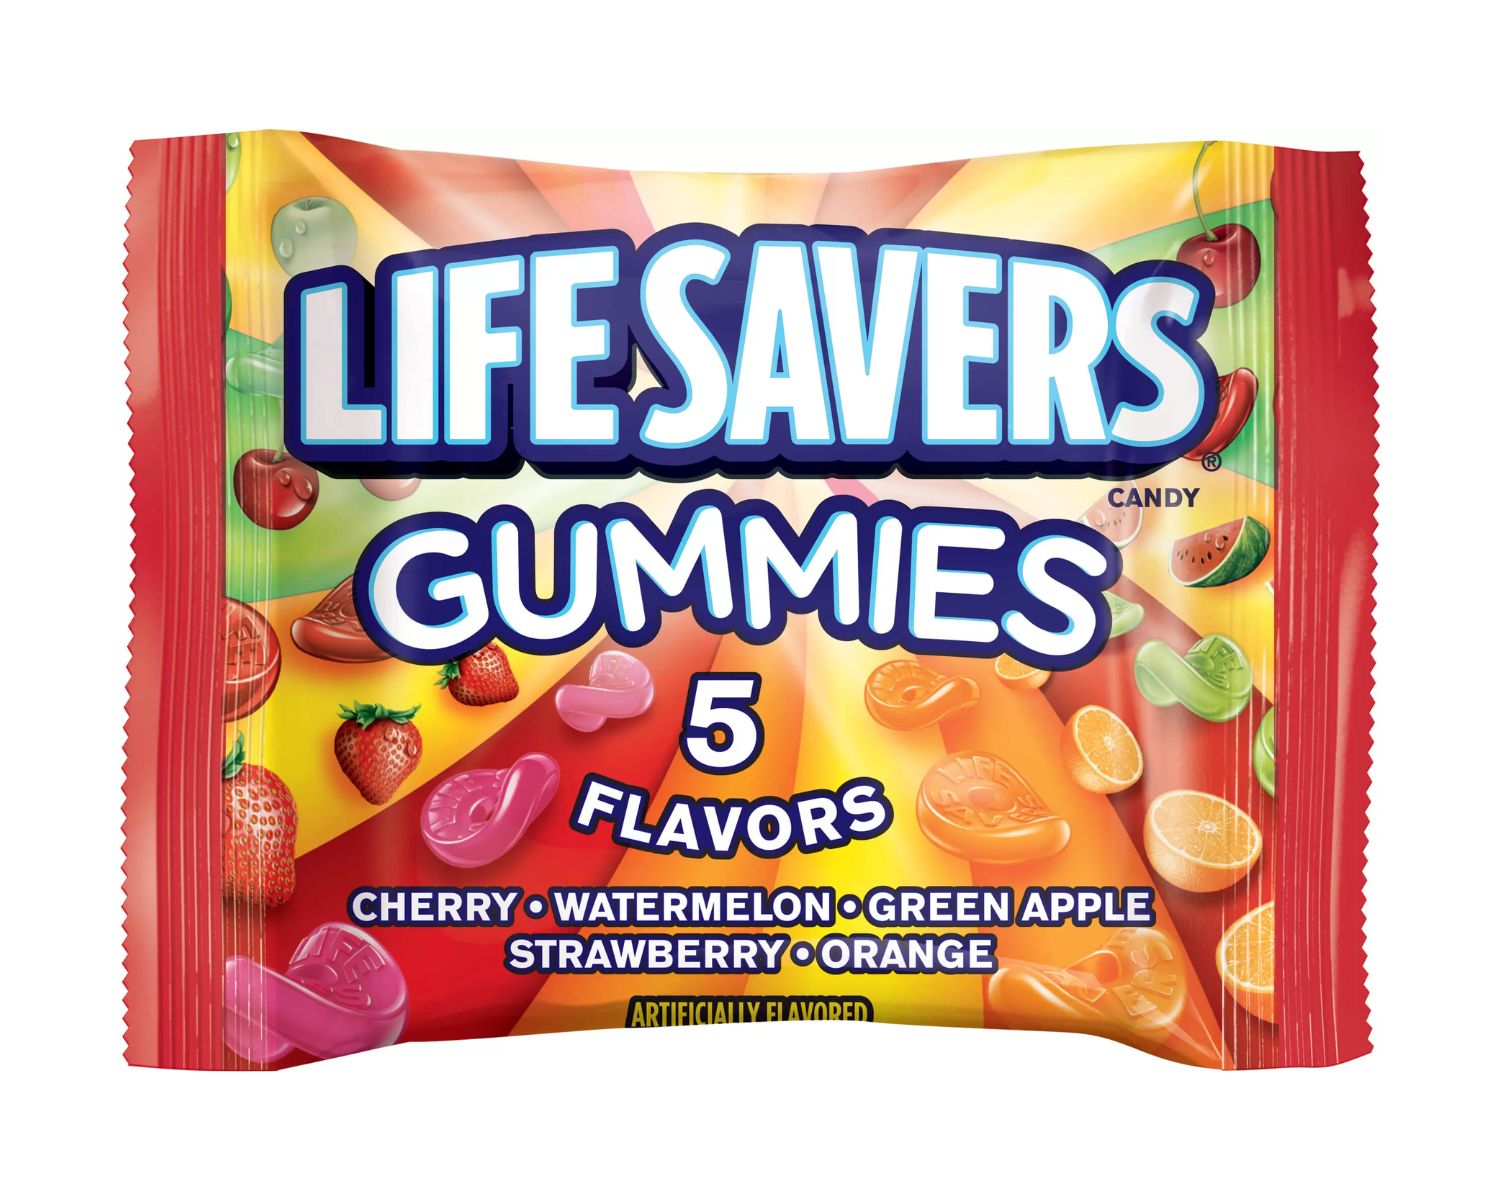 20-lifesaver-gummies-nutrition-facts